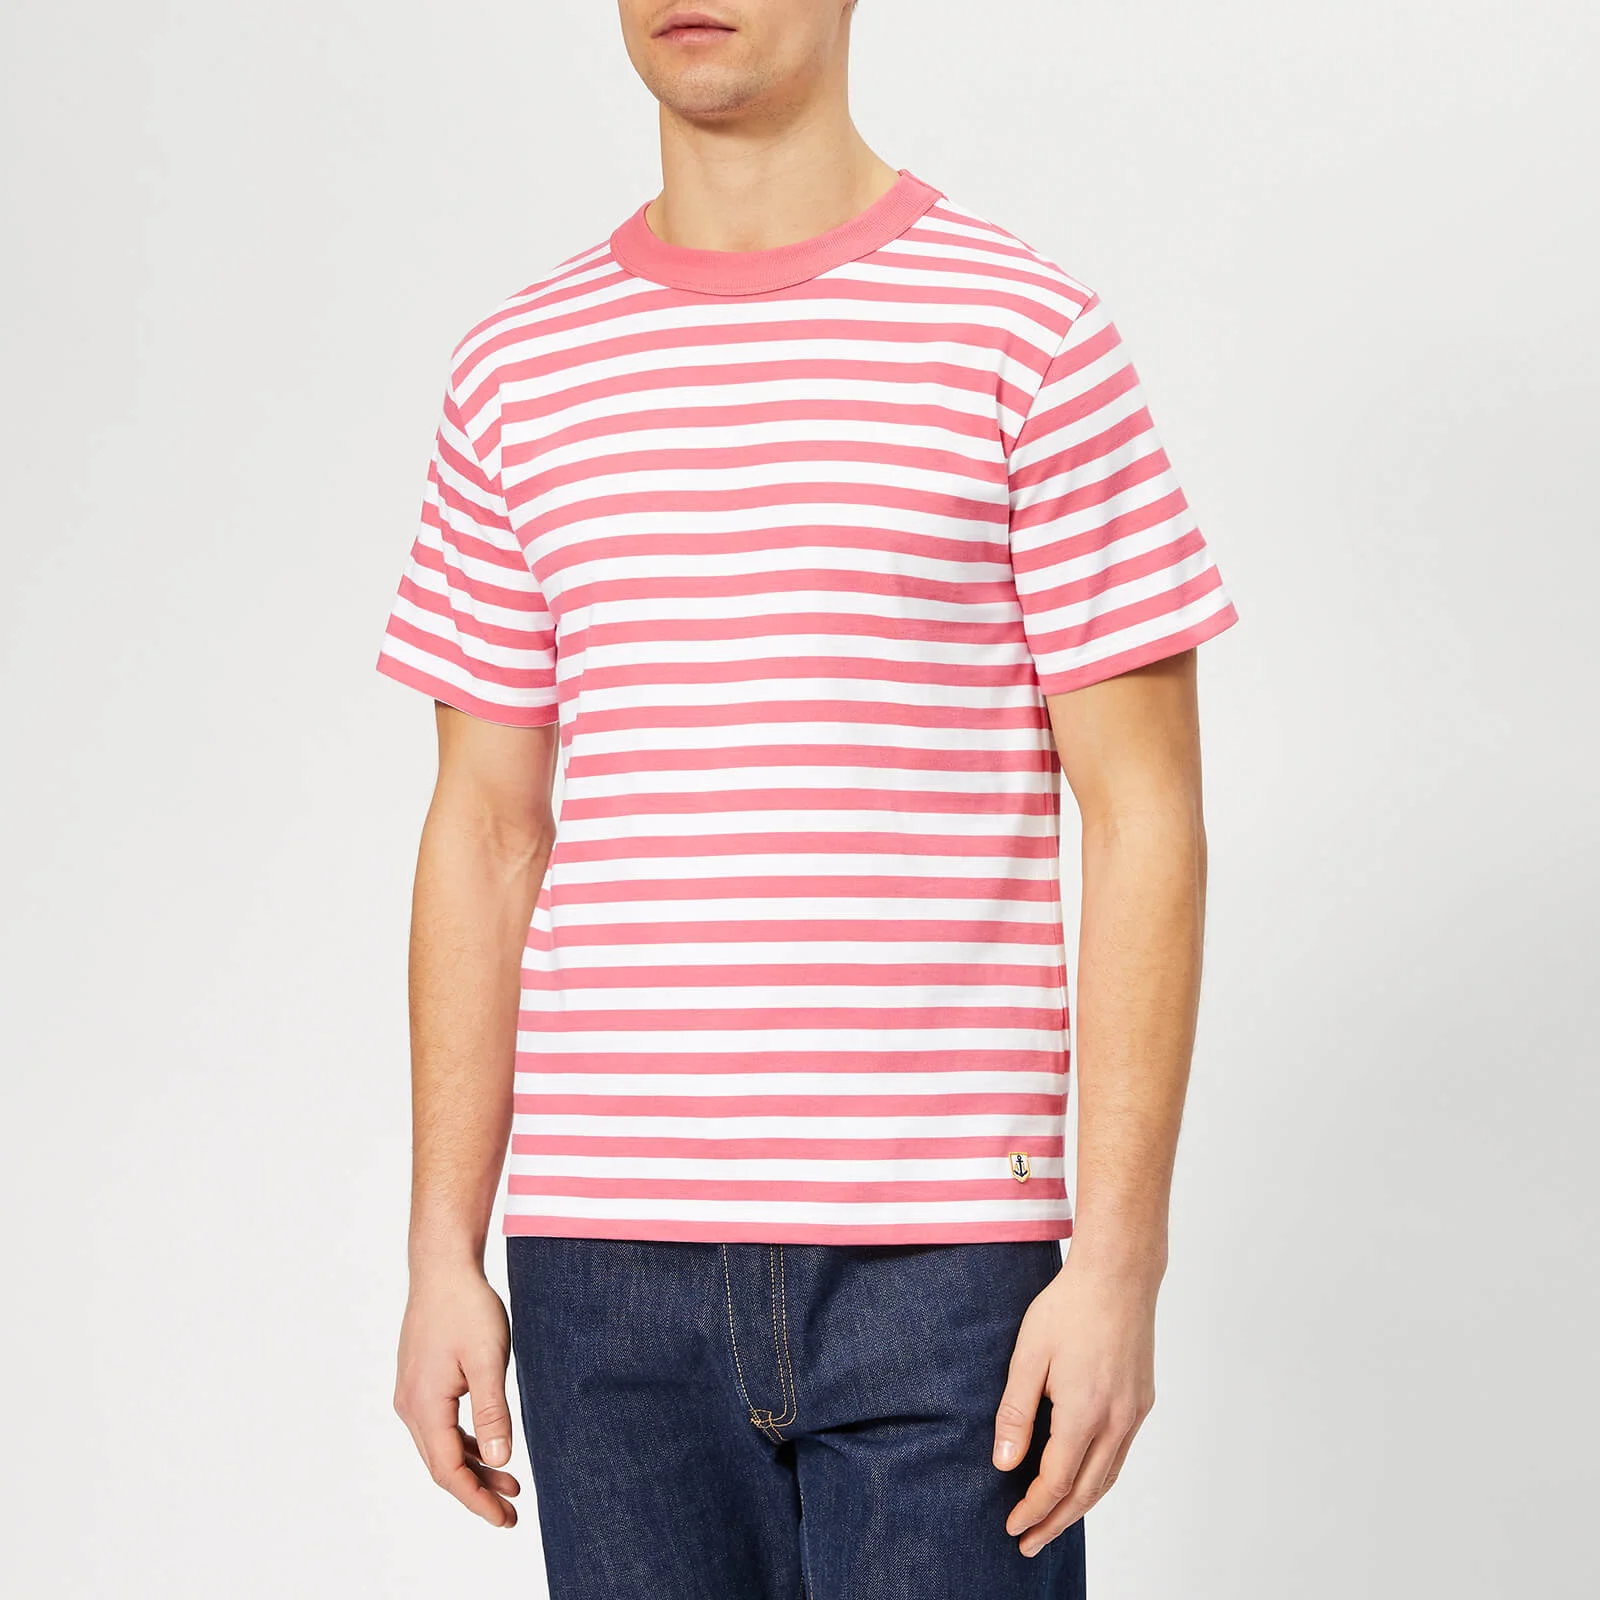 Armor Lux Men's Mc Heritage T-Shirt - New Pink/Blanc Image 1